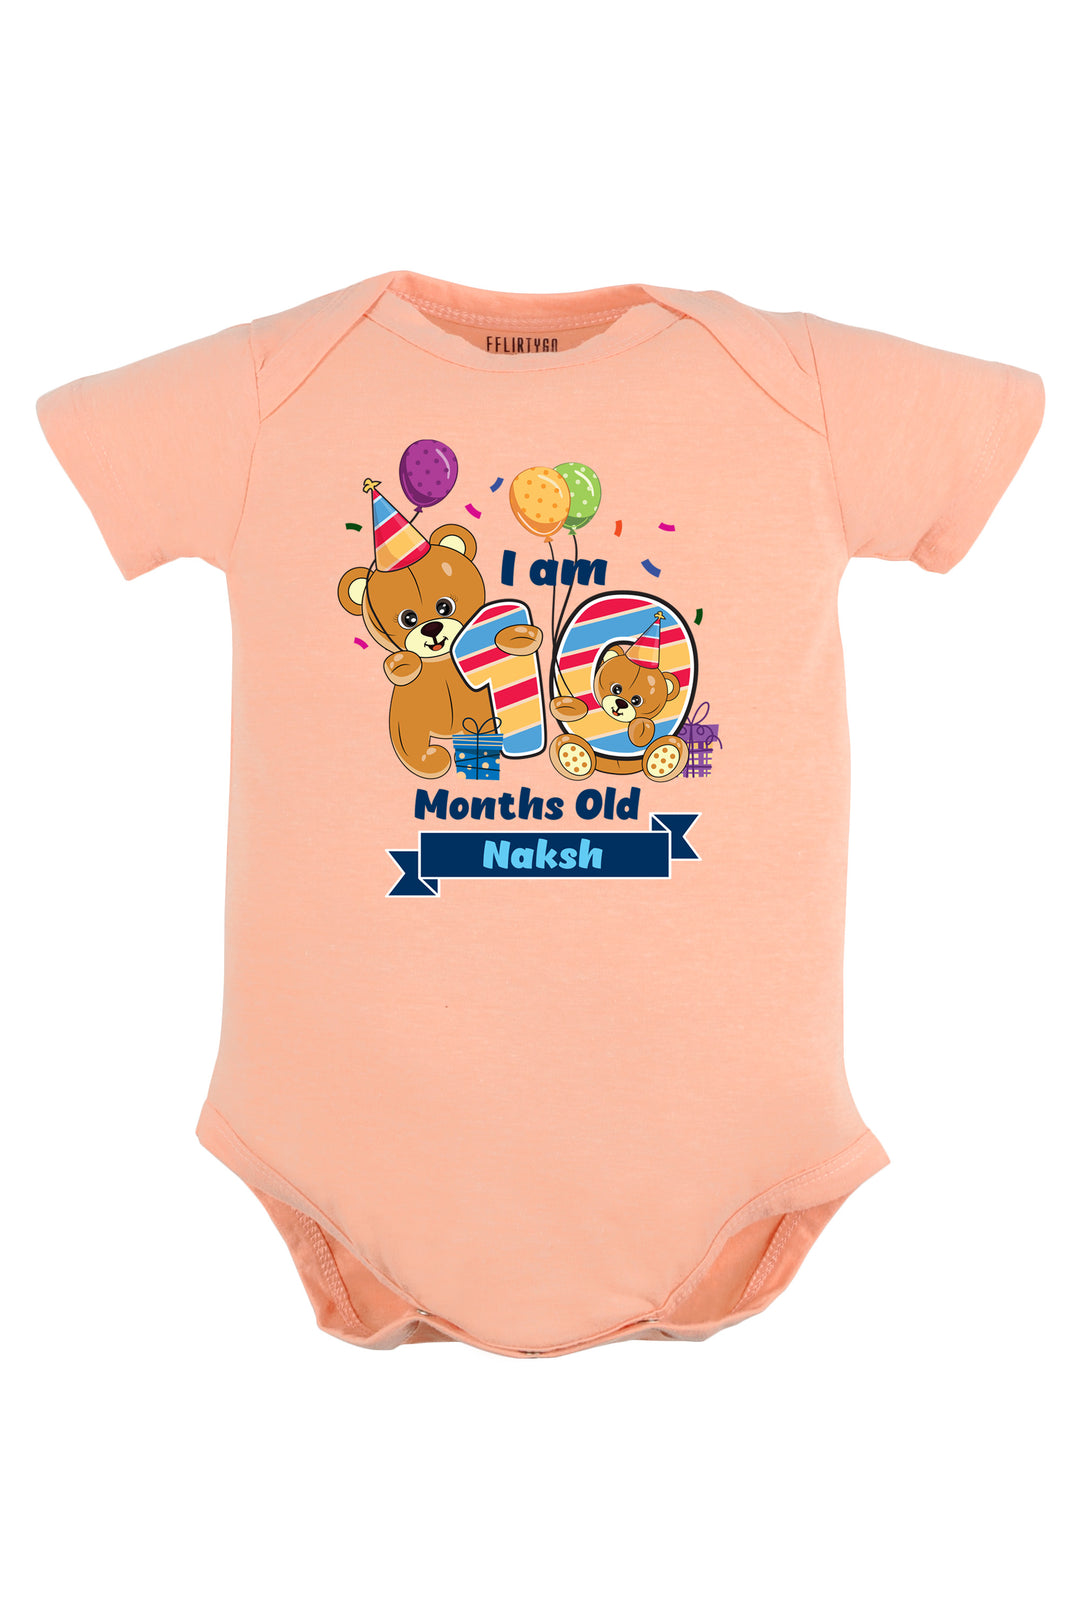 Ten Month Milestone Baby Romper | Onesies - Birthday Teddy w/ Custom Name